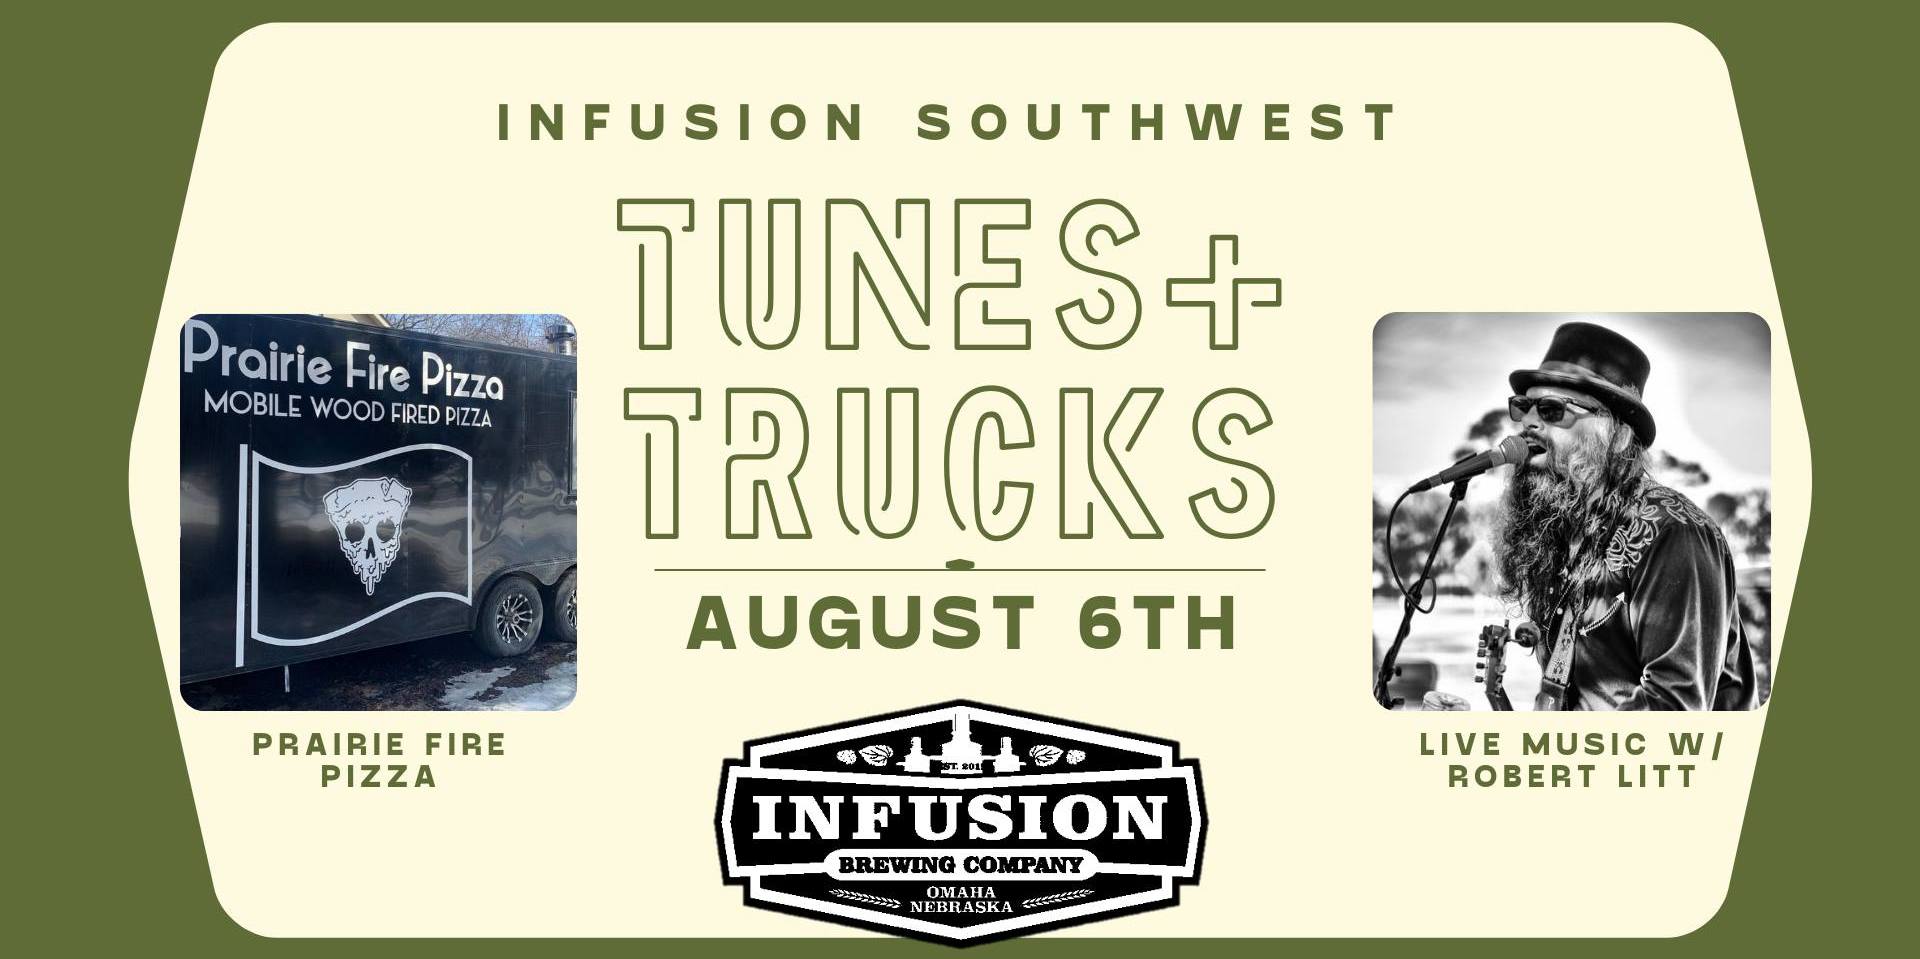 Tunes + Trucks promotional image